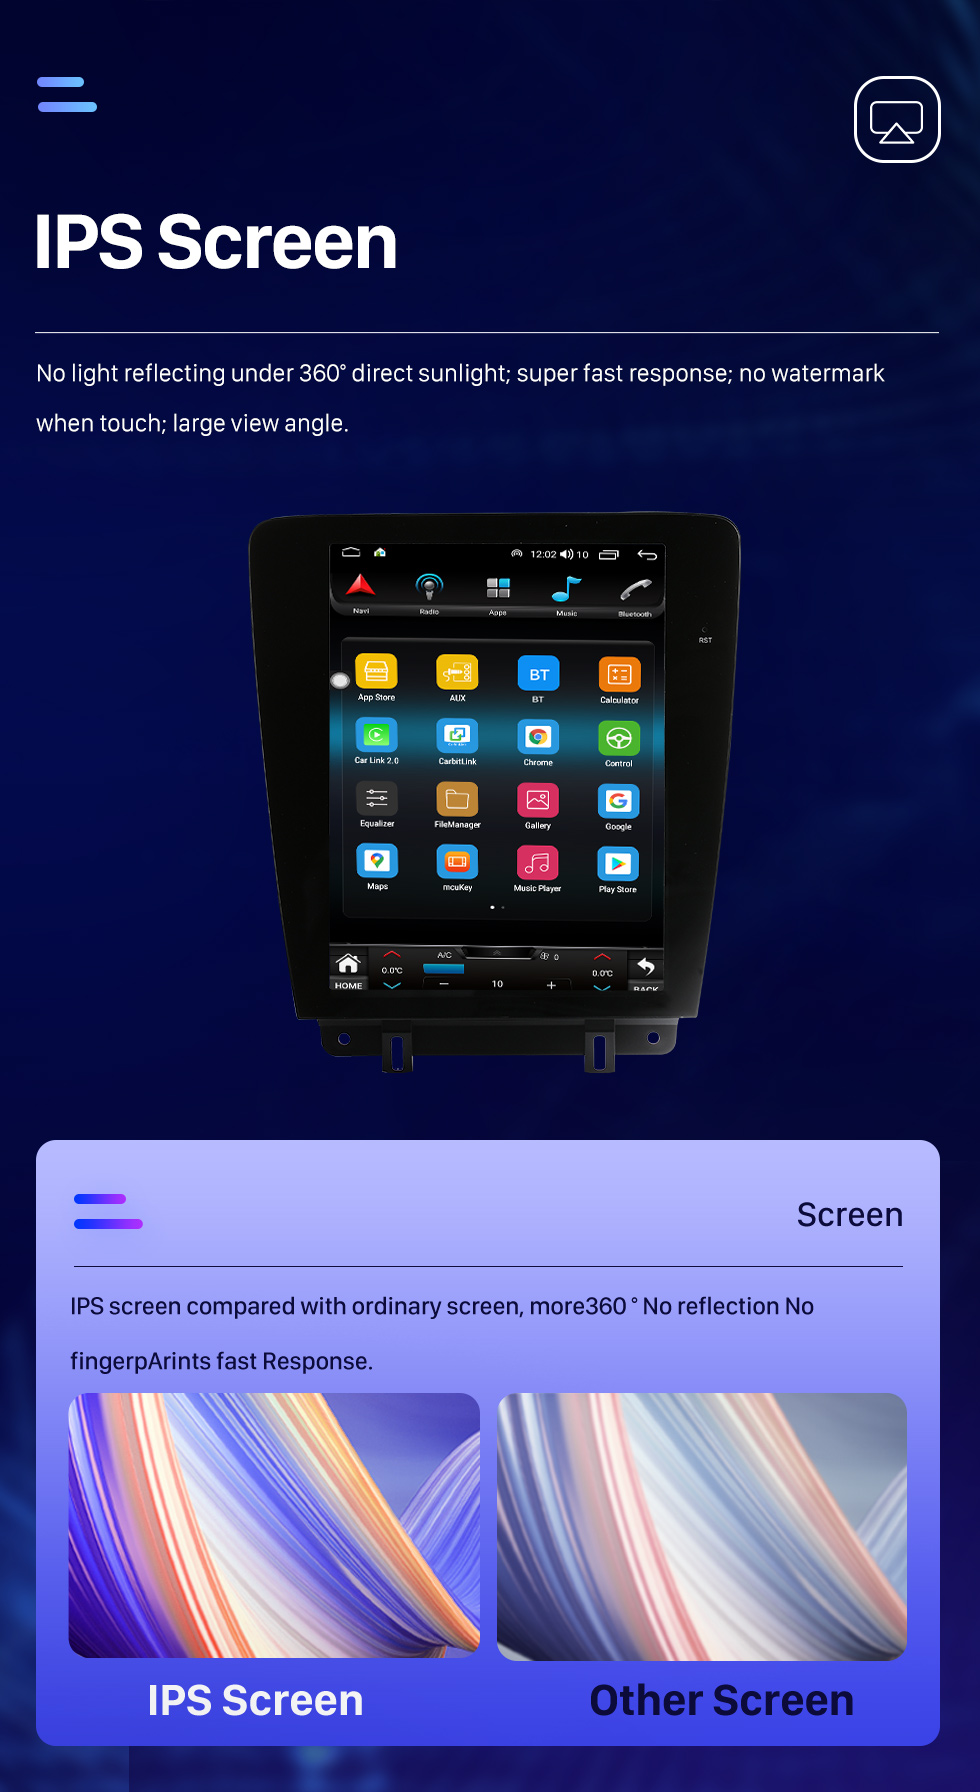 Seicane 12,1-дюймовый Android 10.0 HD Сенсорный экран GPS-навигация Радио для Mitsubishi Pajero Sport V93 V97 V98 2016-2019 с поддержкой Bluetooth Carplay TPMS